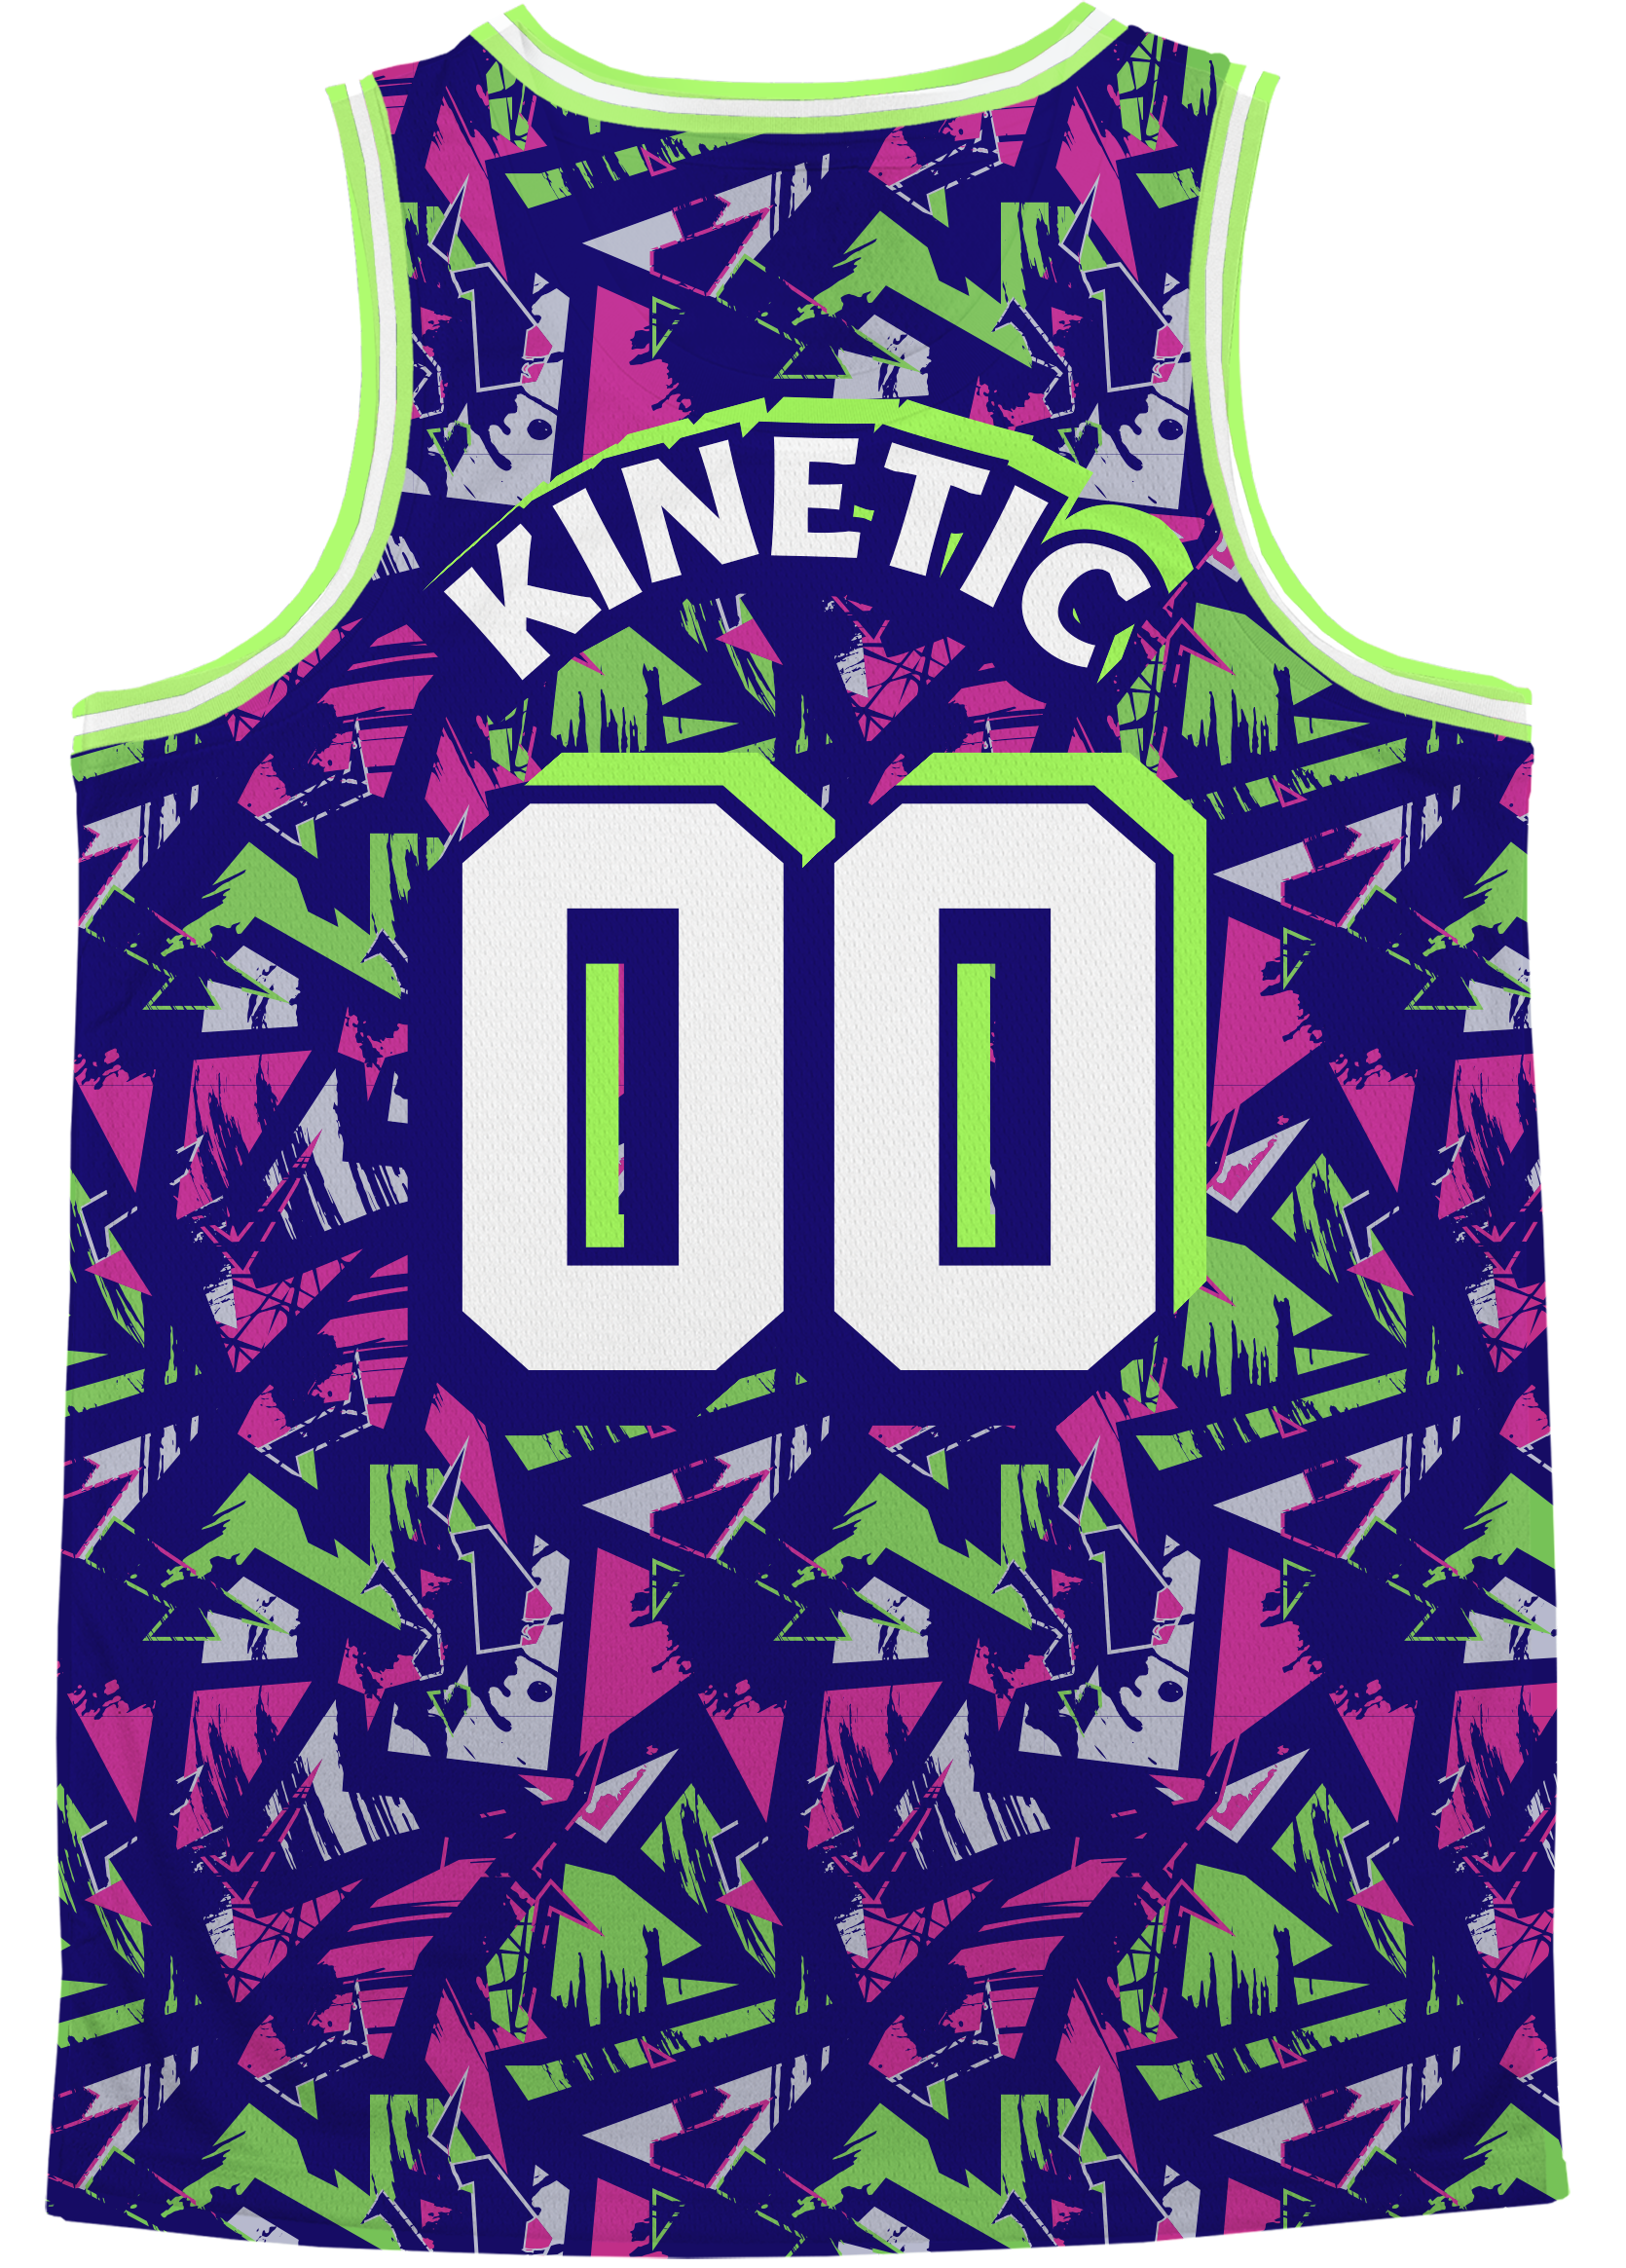 DELTA SIGMA PHI - Purple Shrouds Basketball Jersey